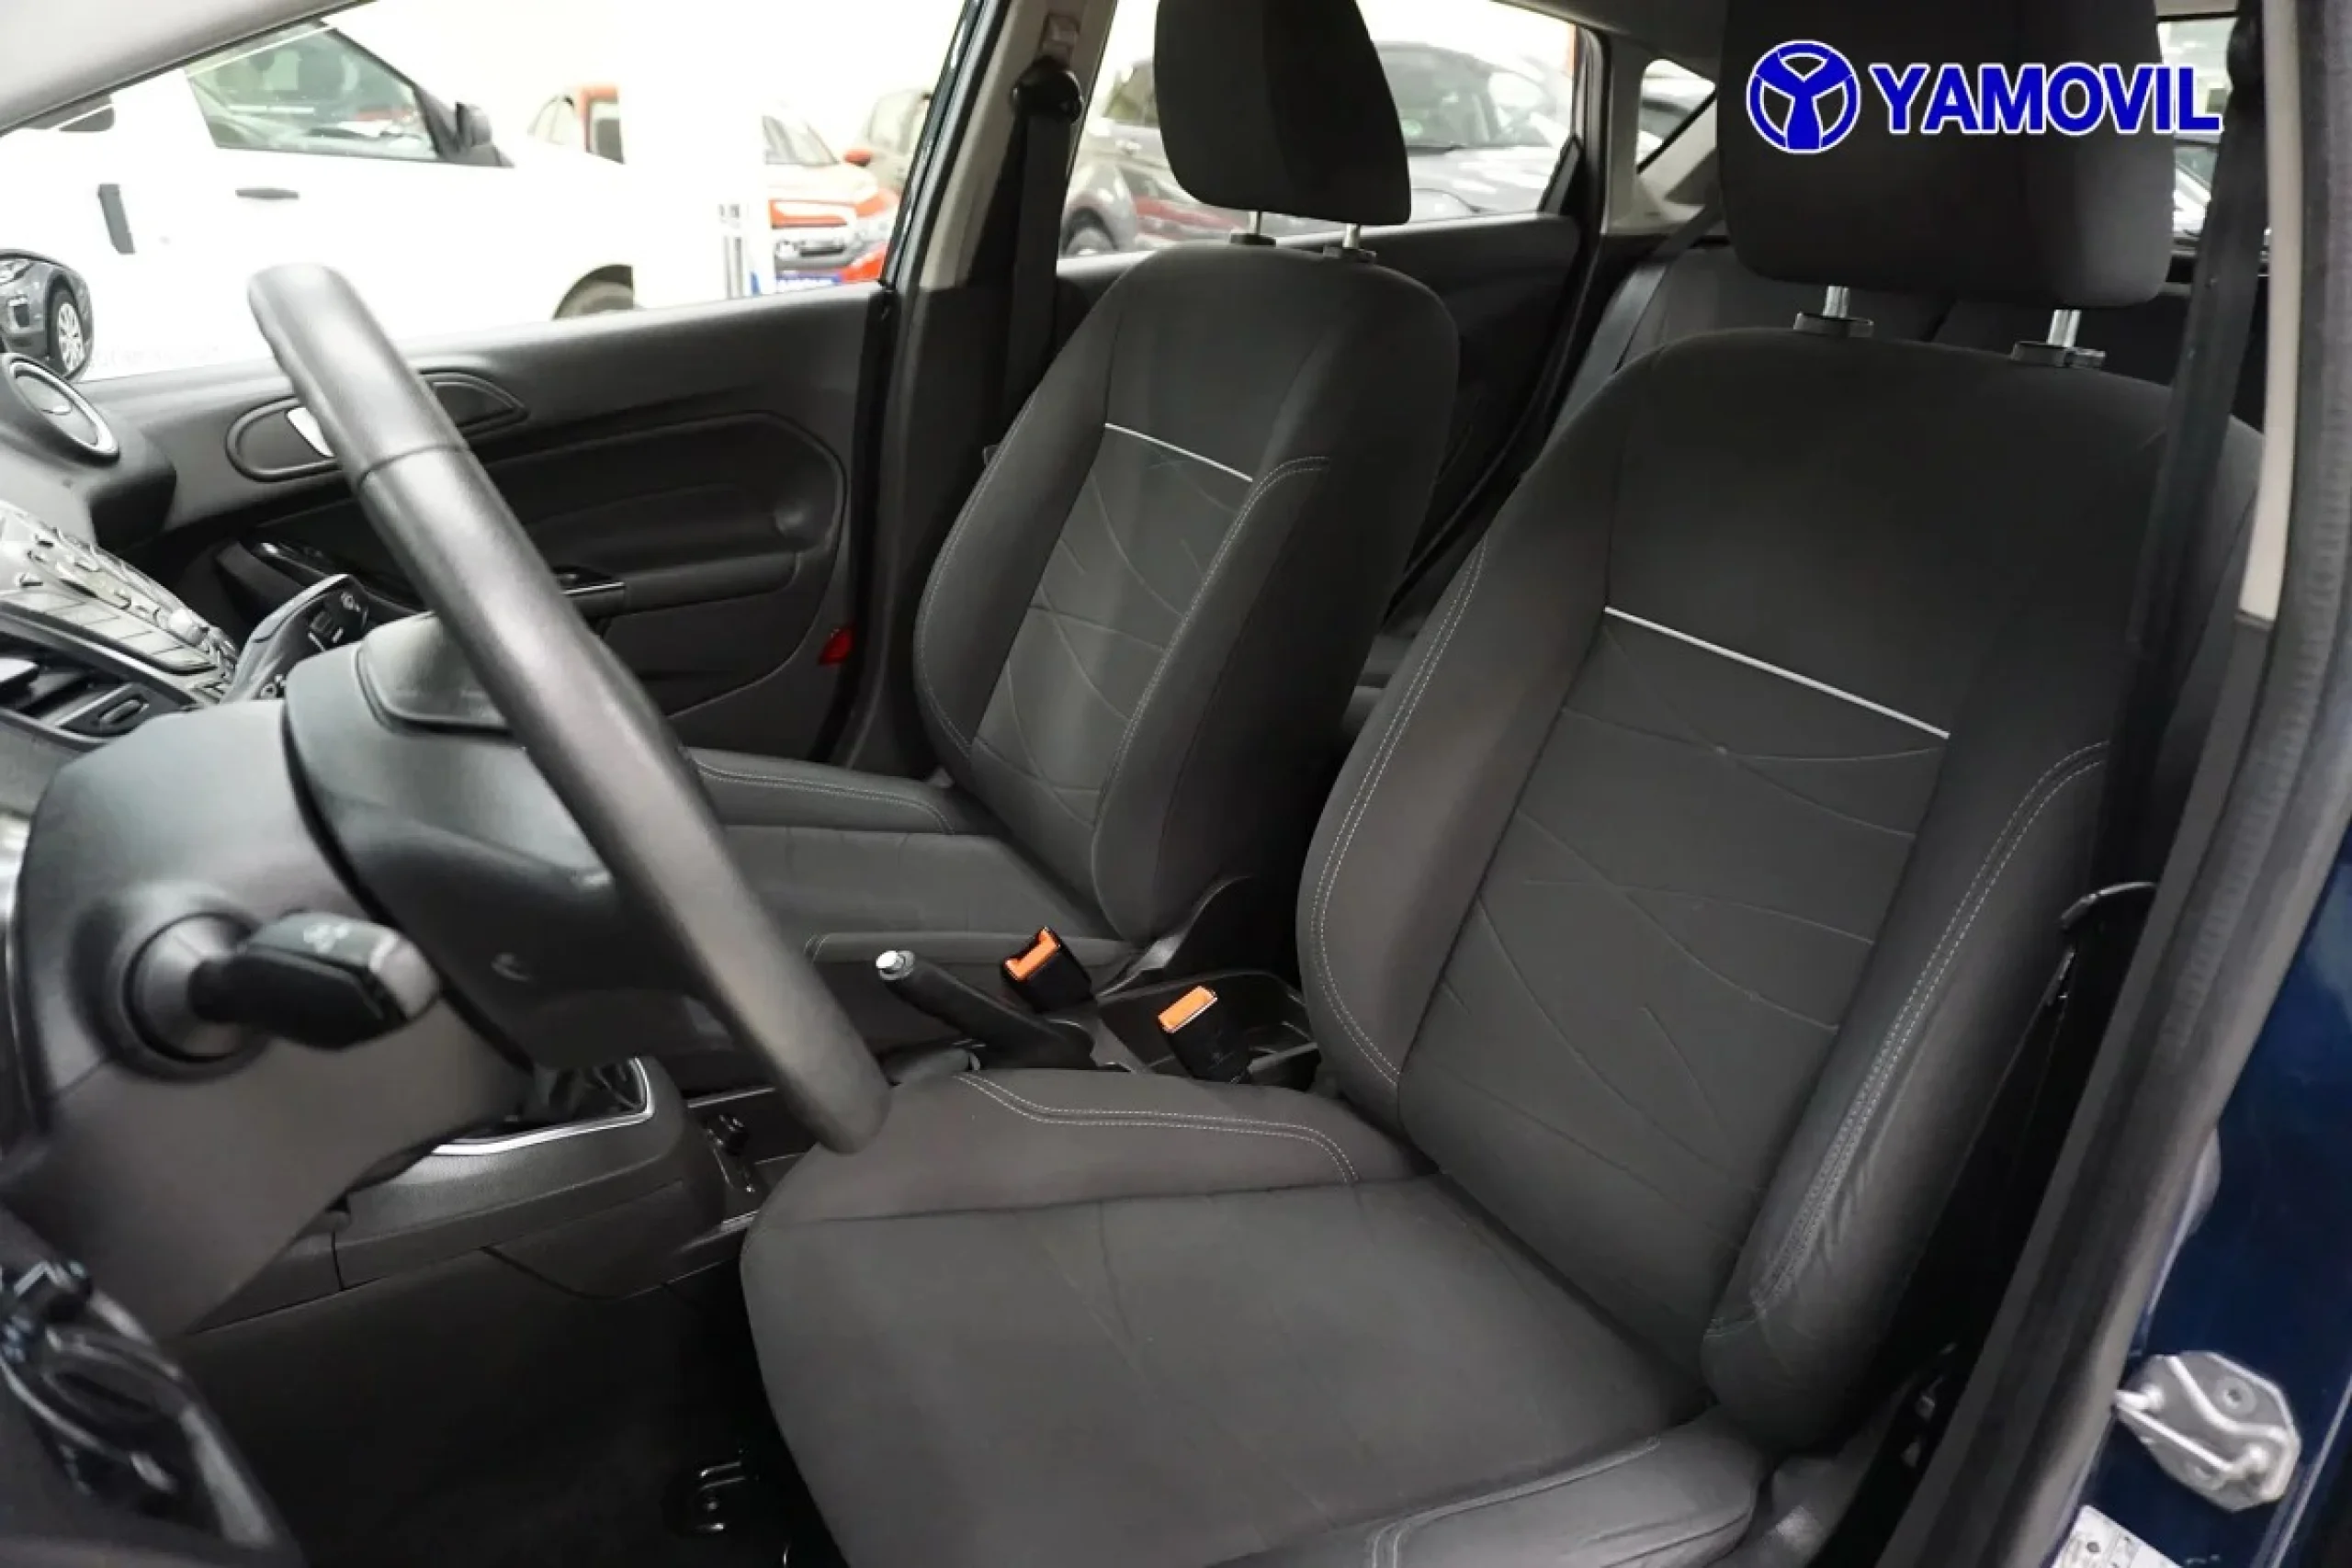 Ford Fiesta 1.25 Duratec Trend 60 kW (82 CV) - Foto 13